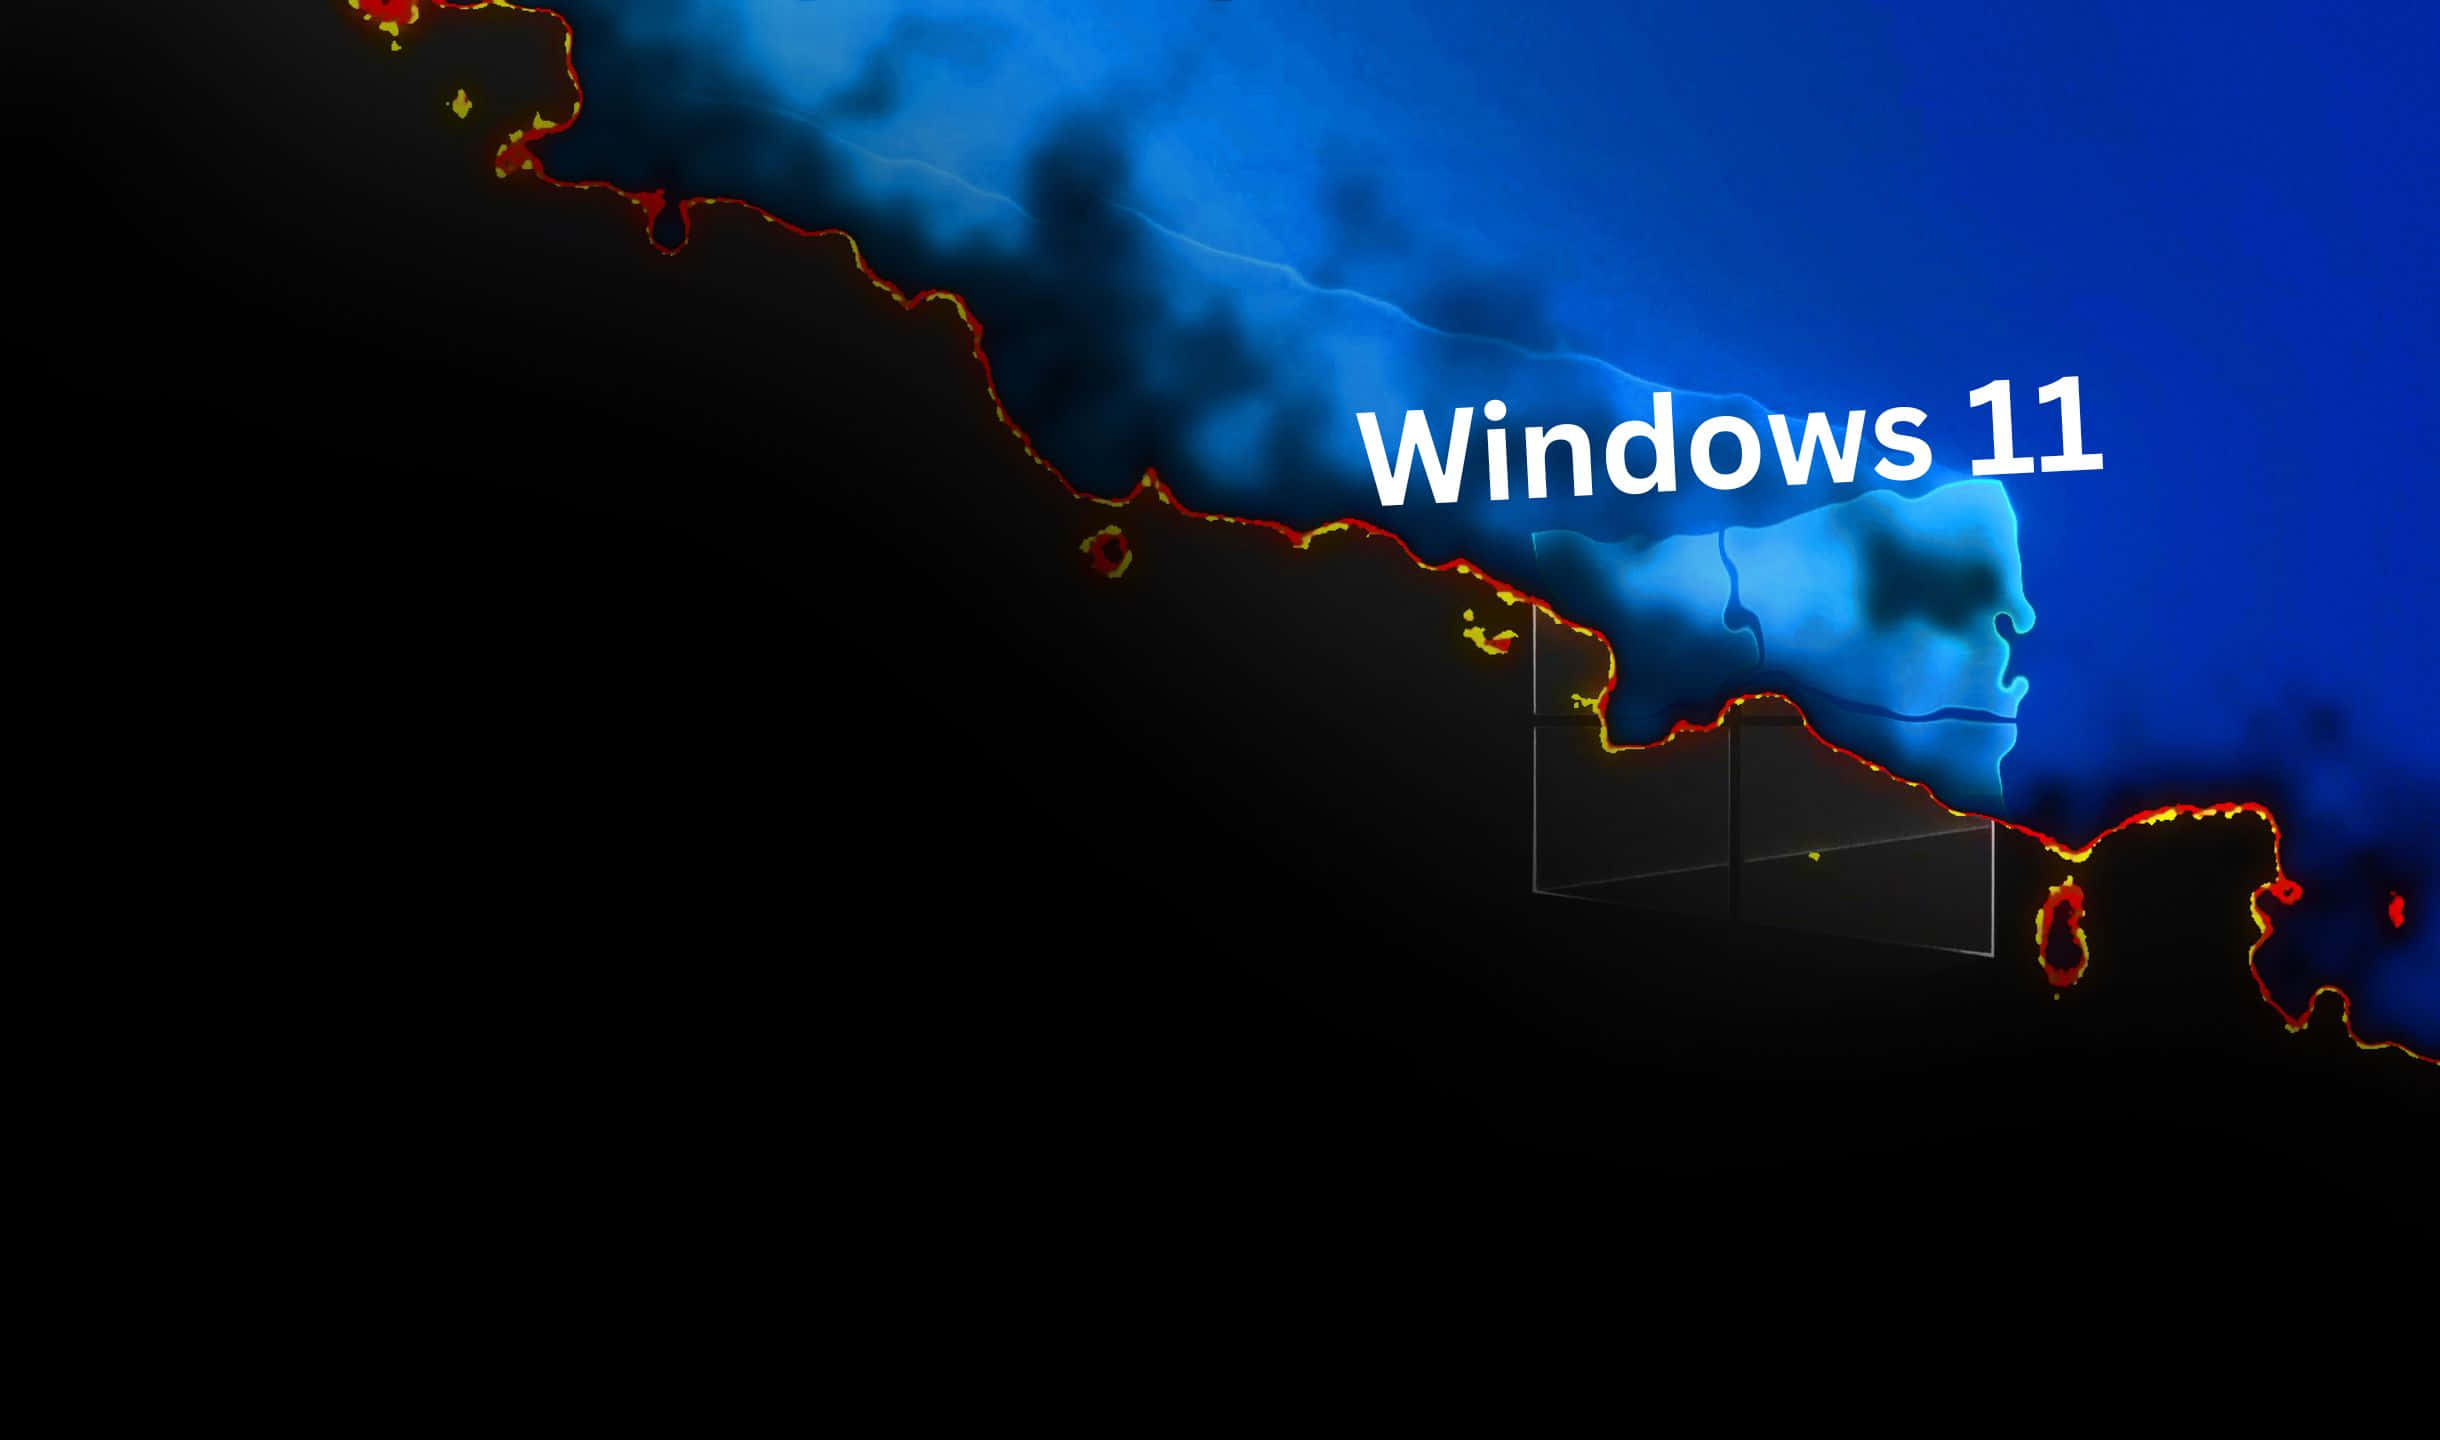 Windows 11 Hd Wallpapers